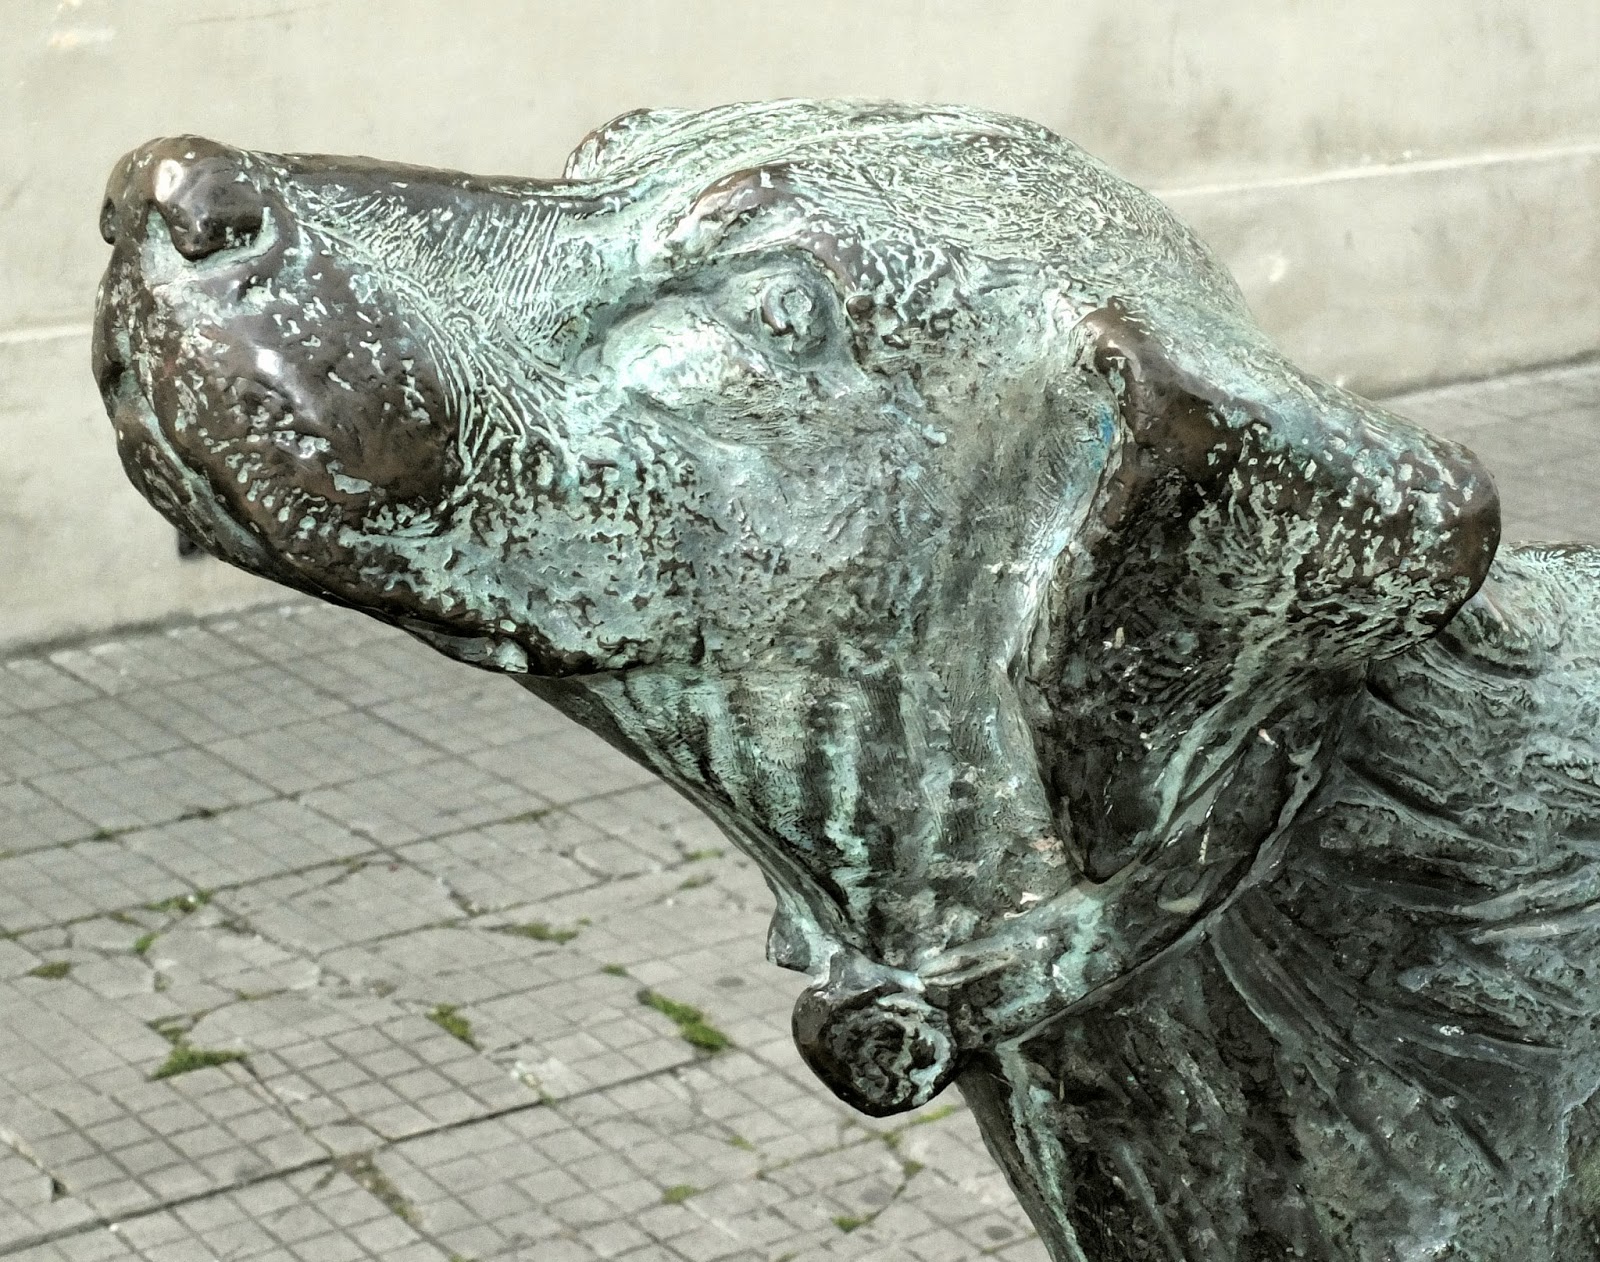  Fido the Dog Statue.  Borgo San Lorenzo, Tuscany